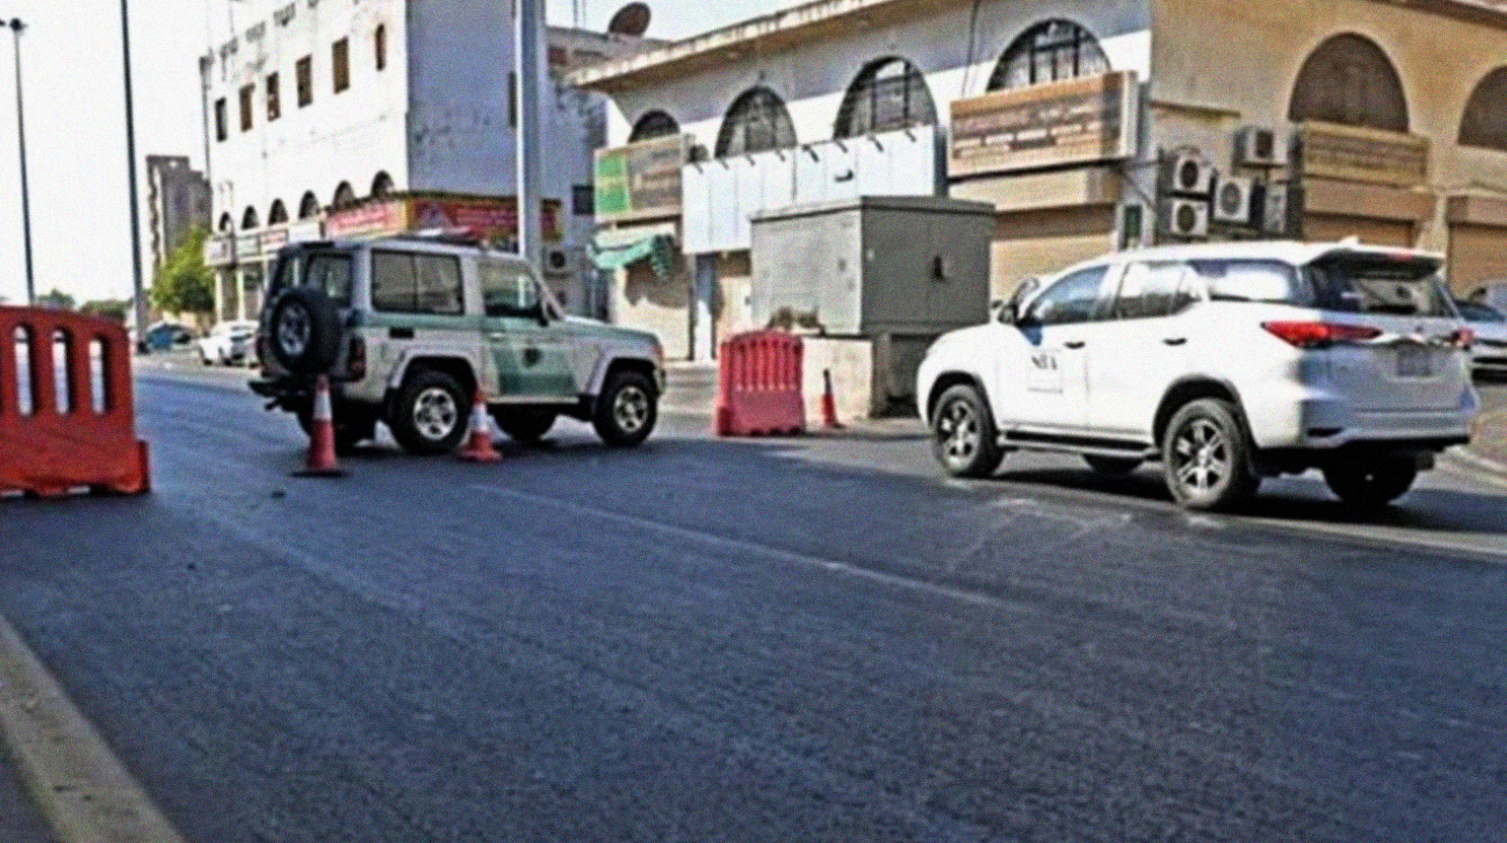 Dua mobil polisi Arab Saudi memblokir jalan di dekat pusat pertokoan Al Balad, Kota Jeddah, usai ledakan bom hari Rabu siang. (Foto:AFP/ArabNews)